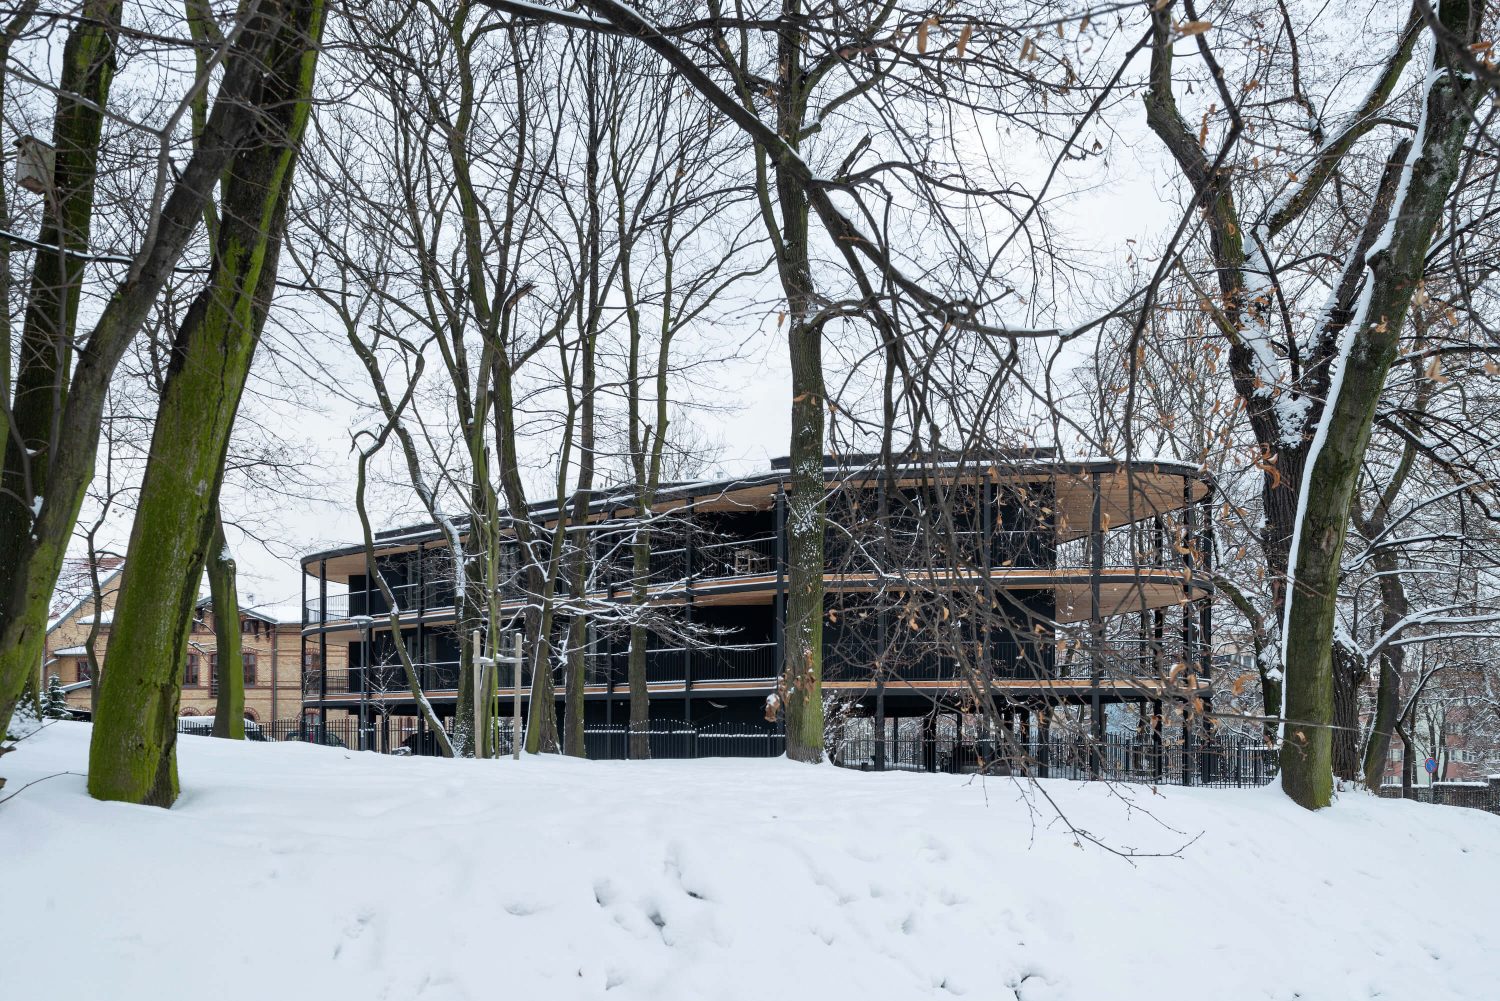 Villa Reden by Architekt Maciej Franta